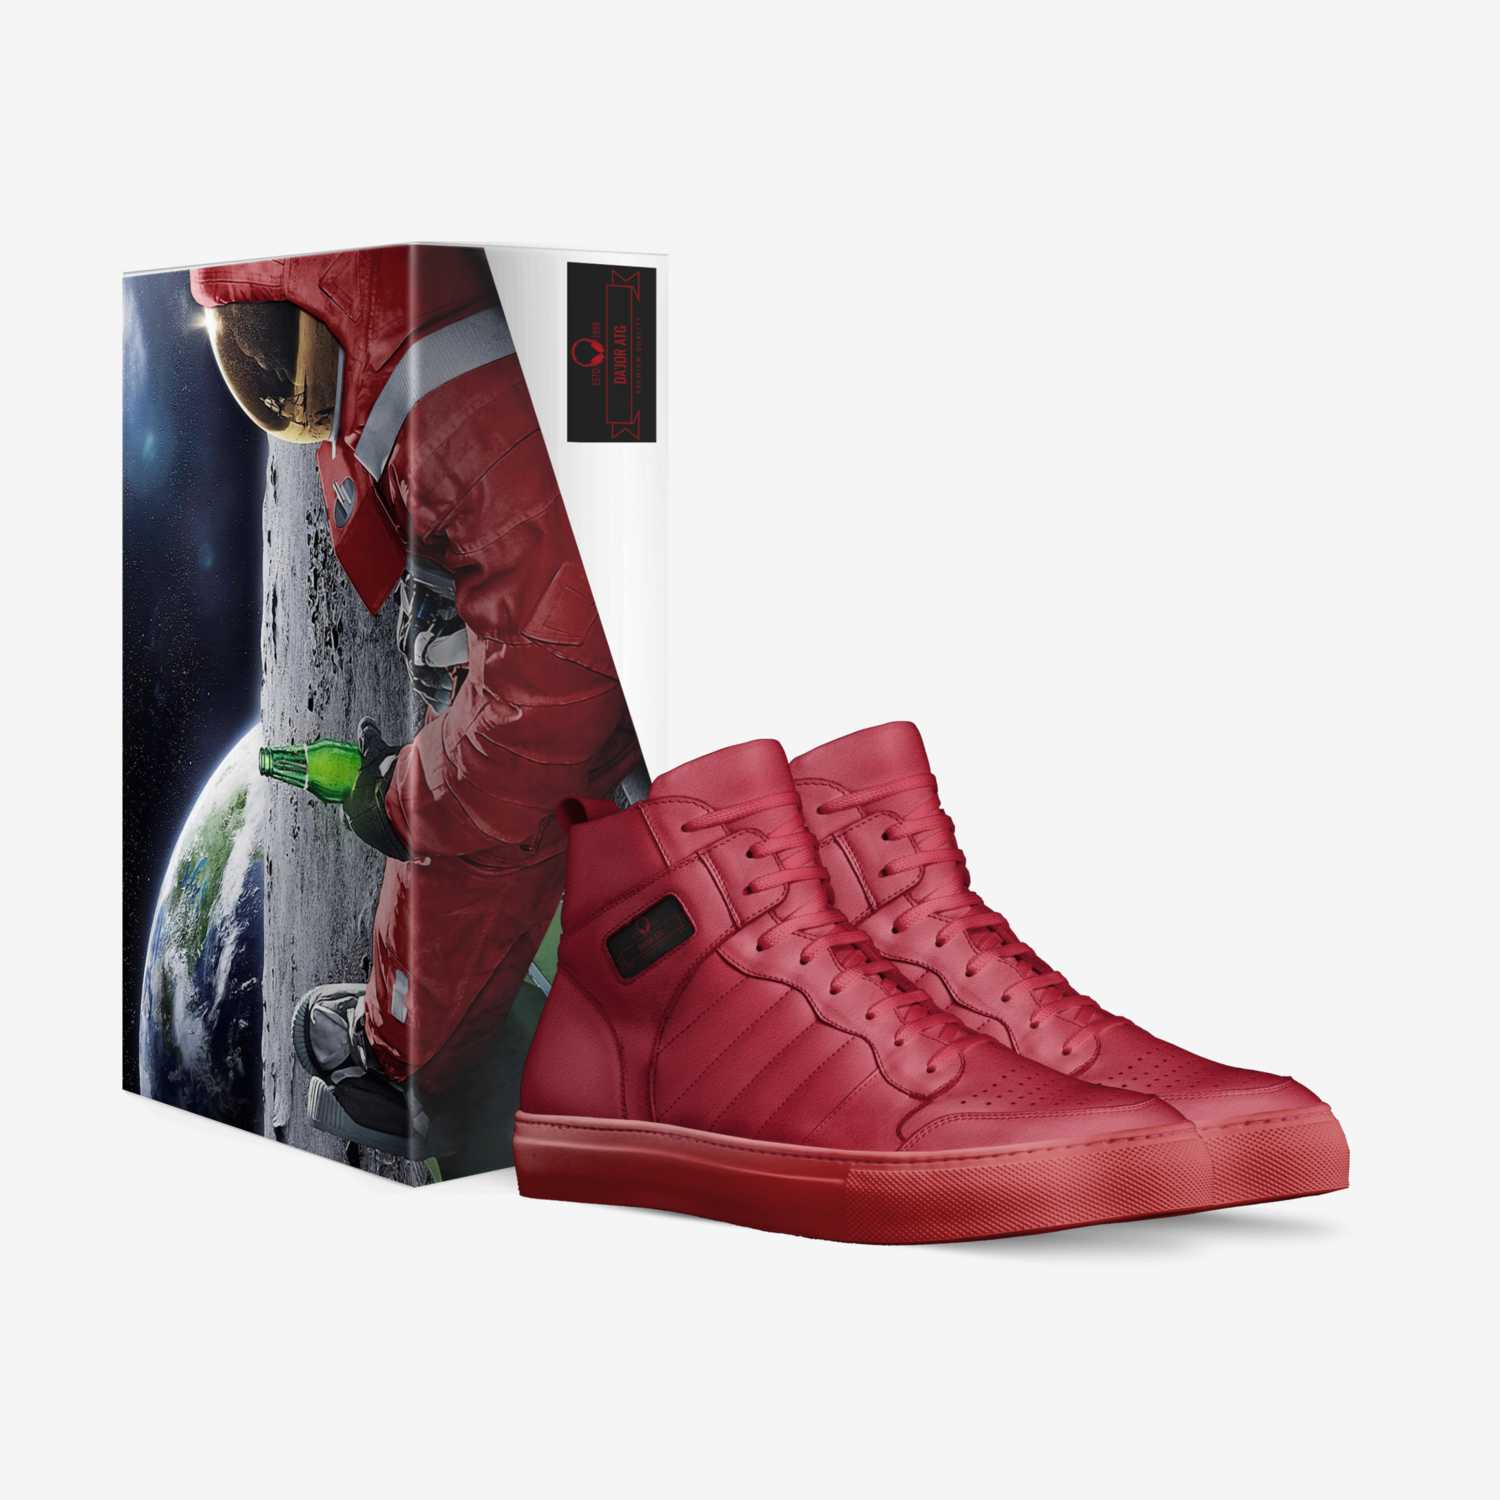 Da'Jor ATG custom made in Italy shoes by Composer King Jordan | Box view